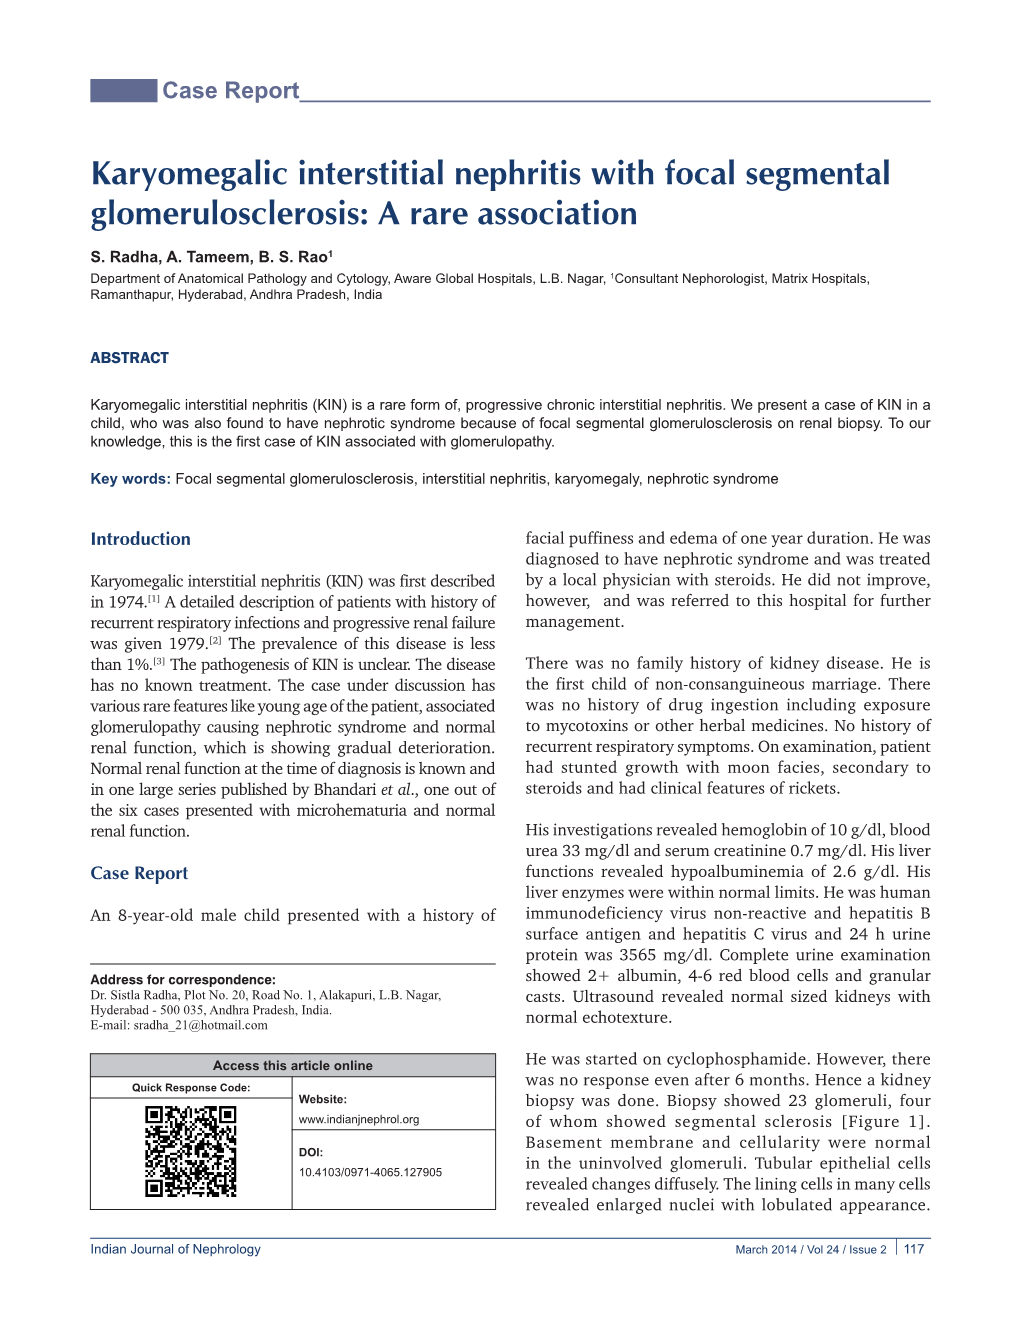 Karyomegalic Interstitial Nephritis with Focal Segmental Glomerulosclerosis: a Rare Association